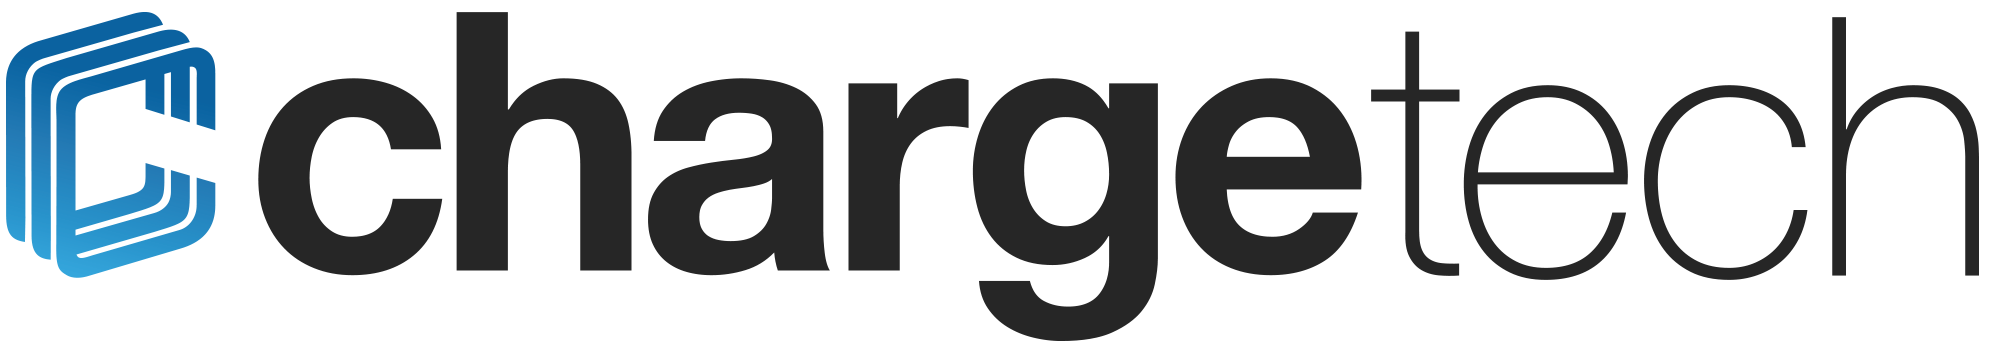 ChargeTech_logo